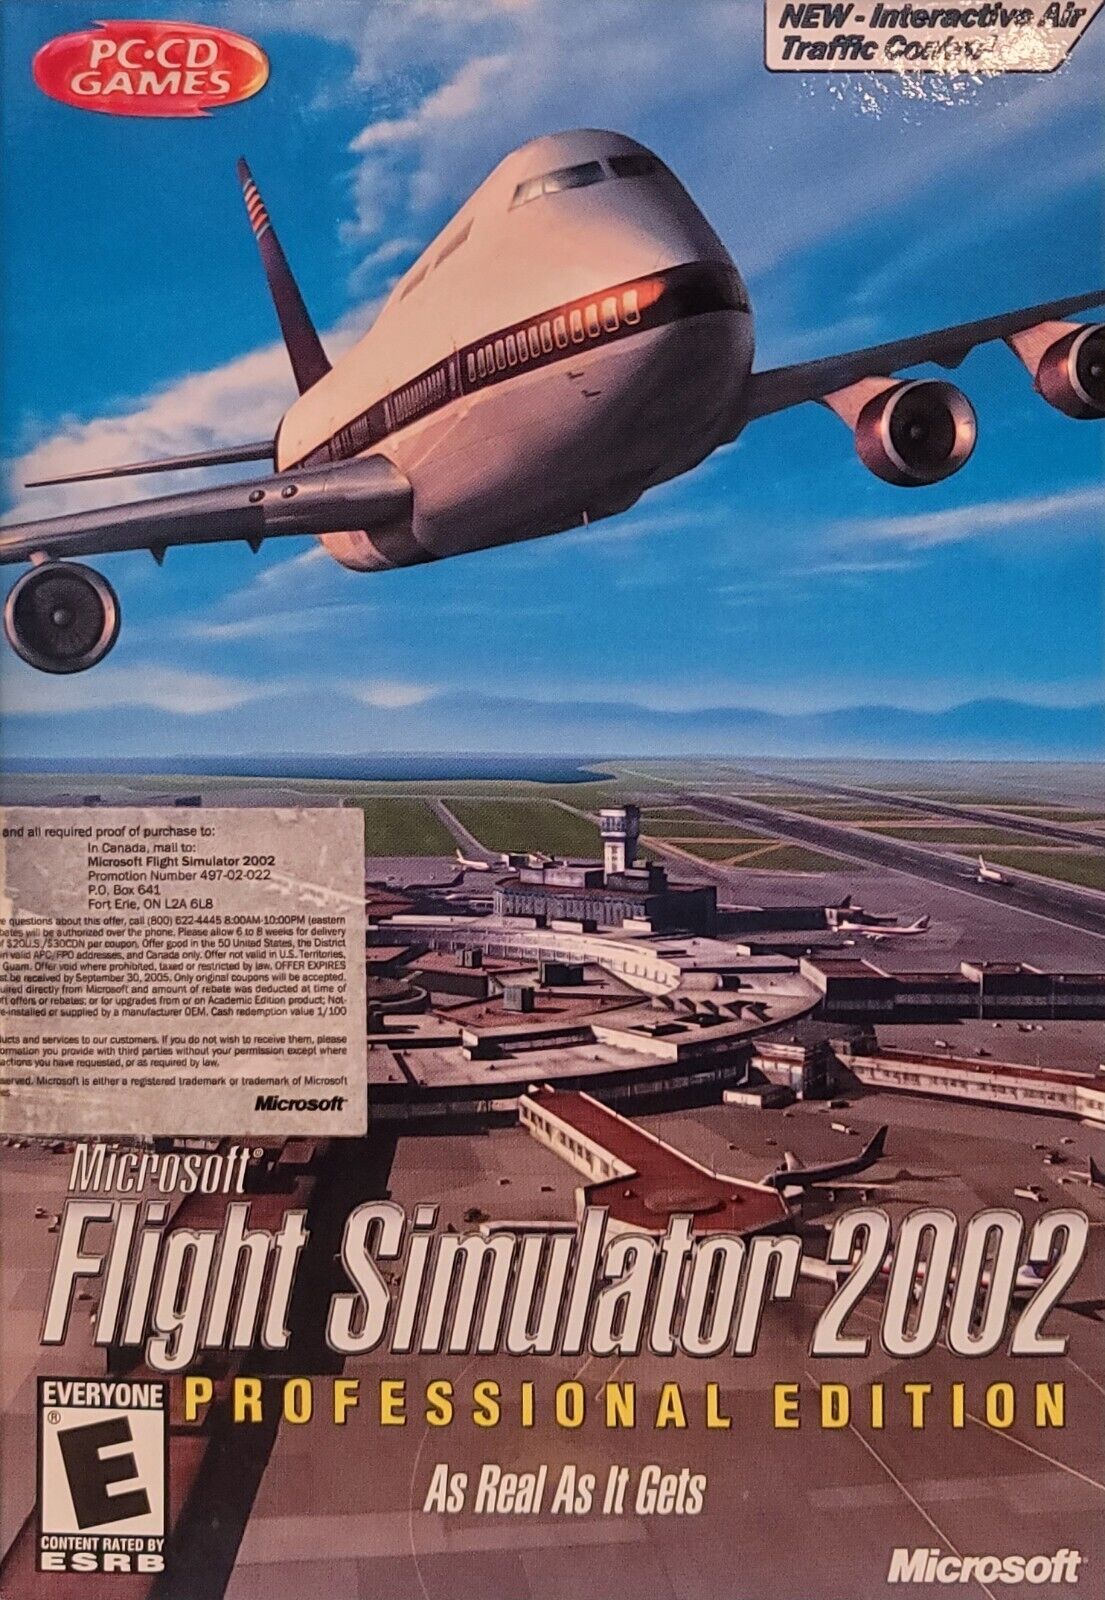 Microsoft Flight Simulator 2002 Pro Edition PC CD-ROM Game 3 CDs by Real Pilots